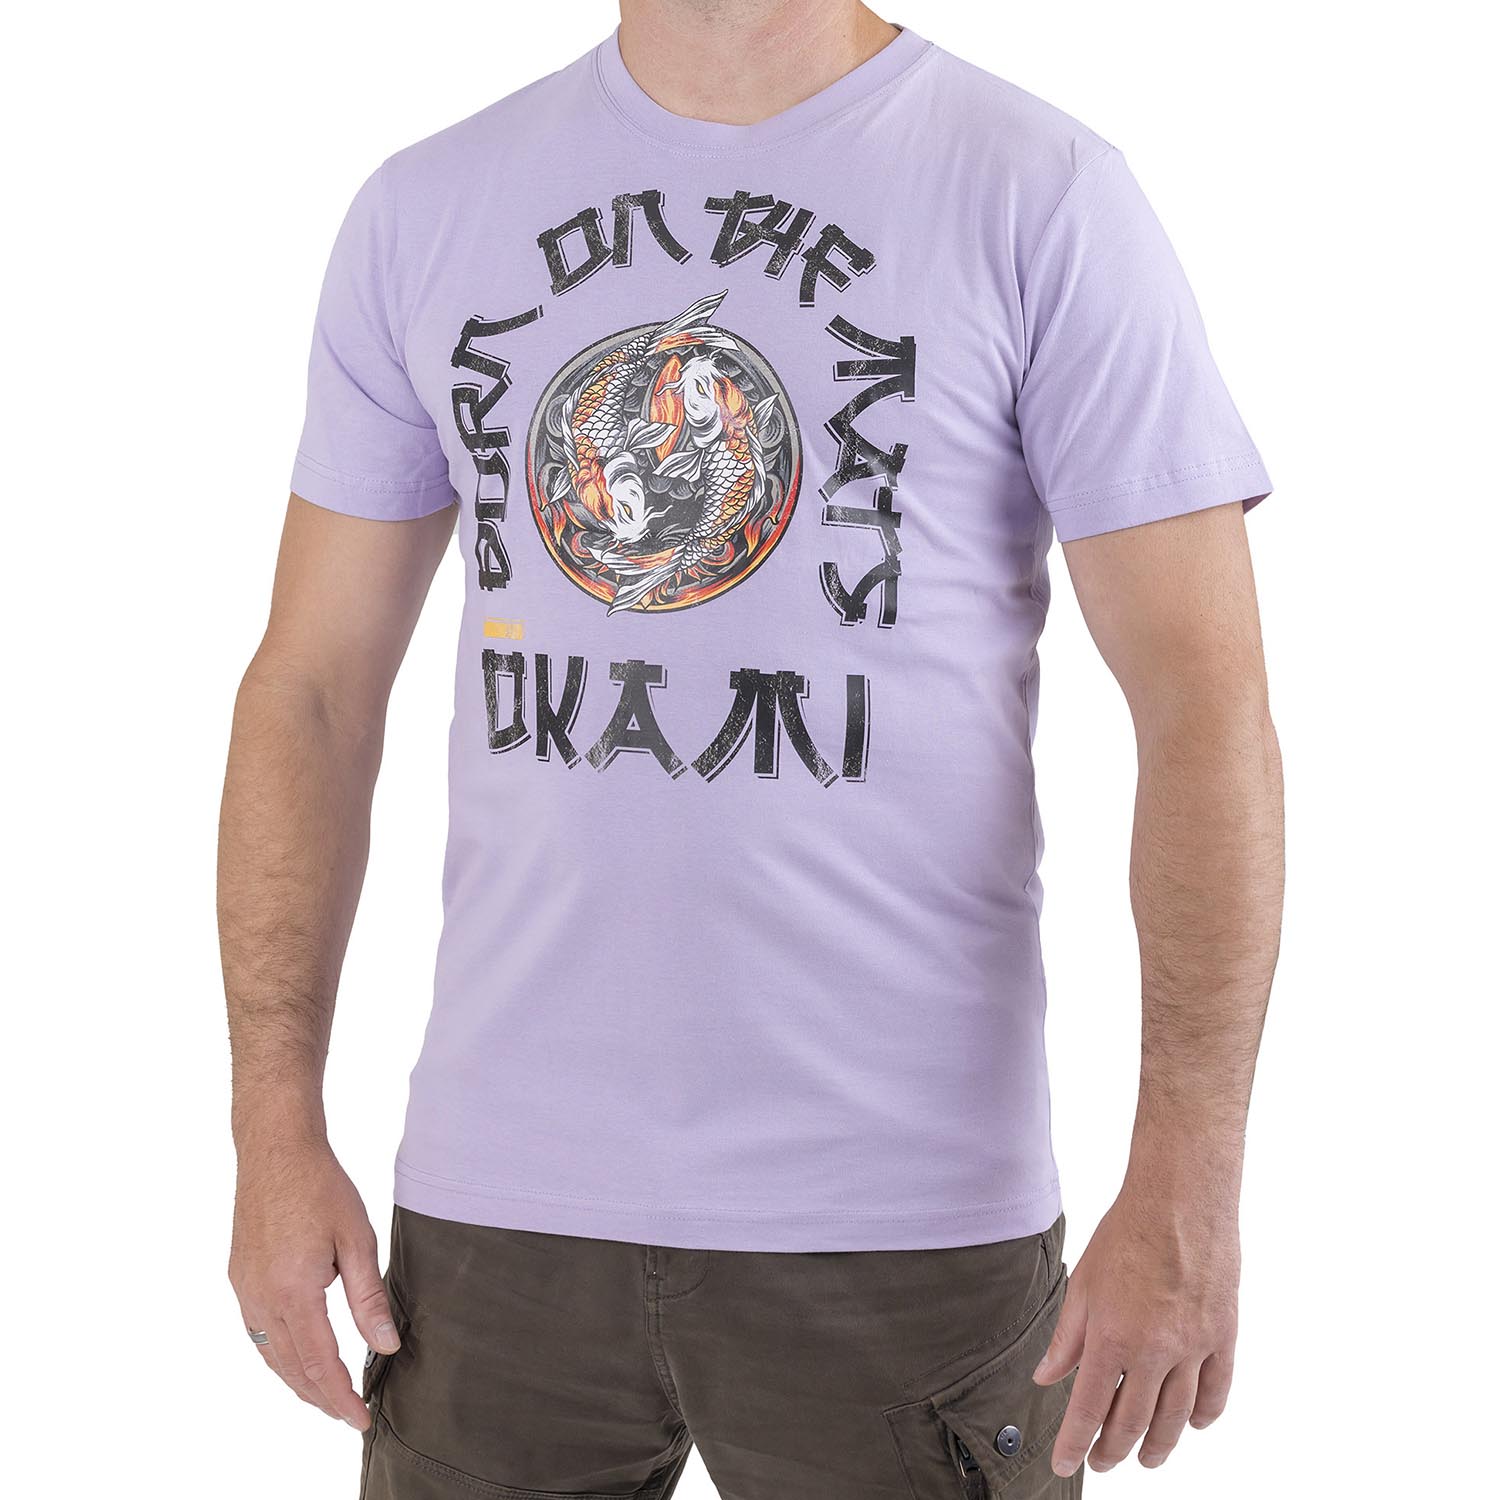 OKAMI T-Shirt, Kois, purple